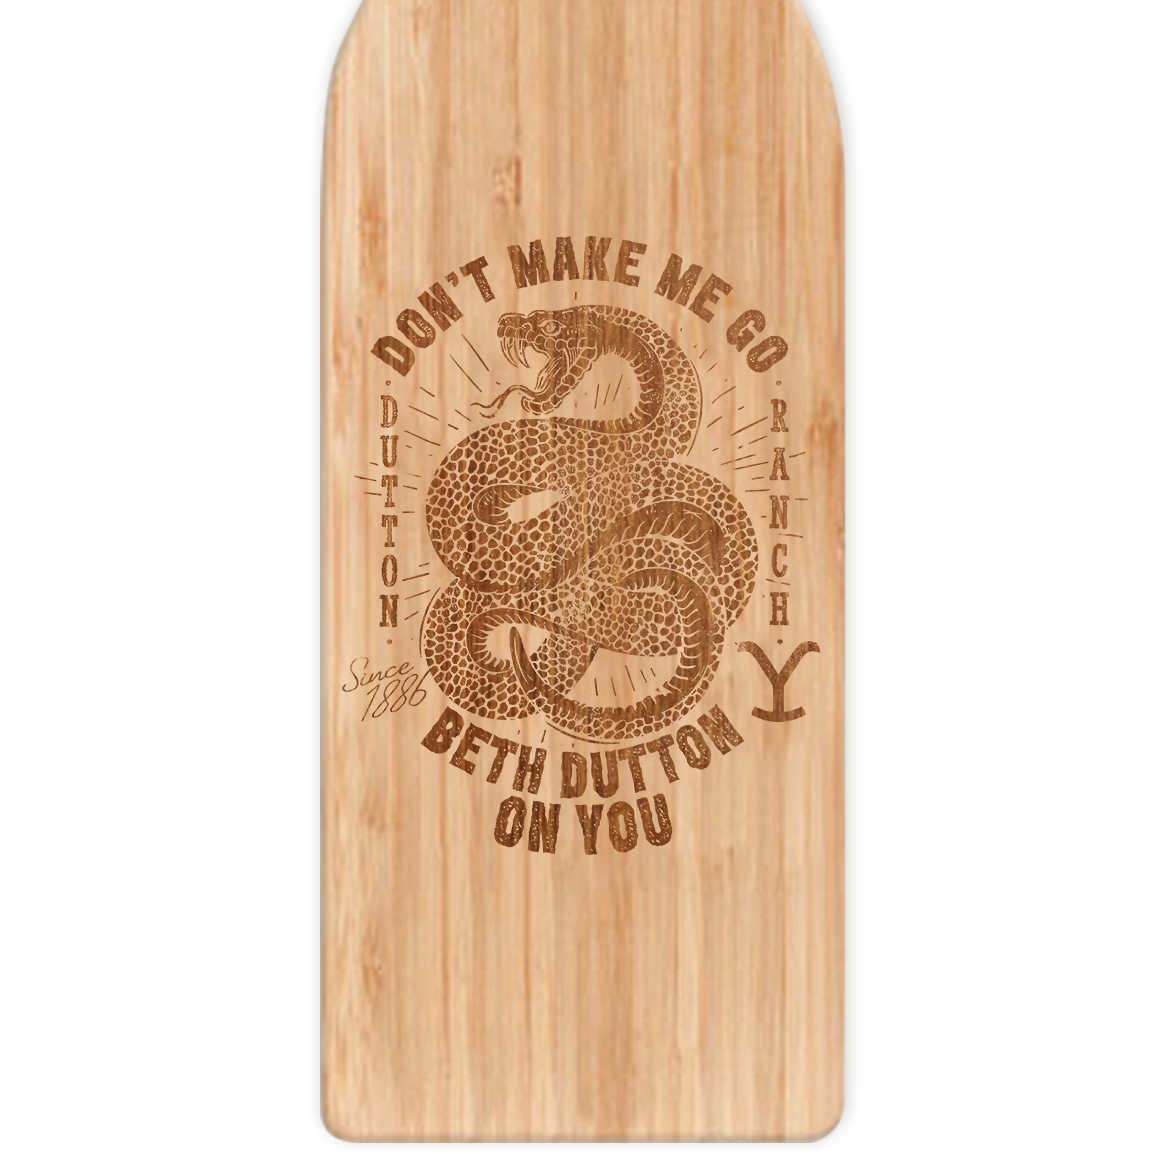 Yellowstone Snake Beth Dutton On You Wine Bottle Cutting Board